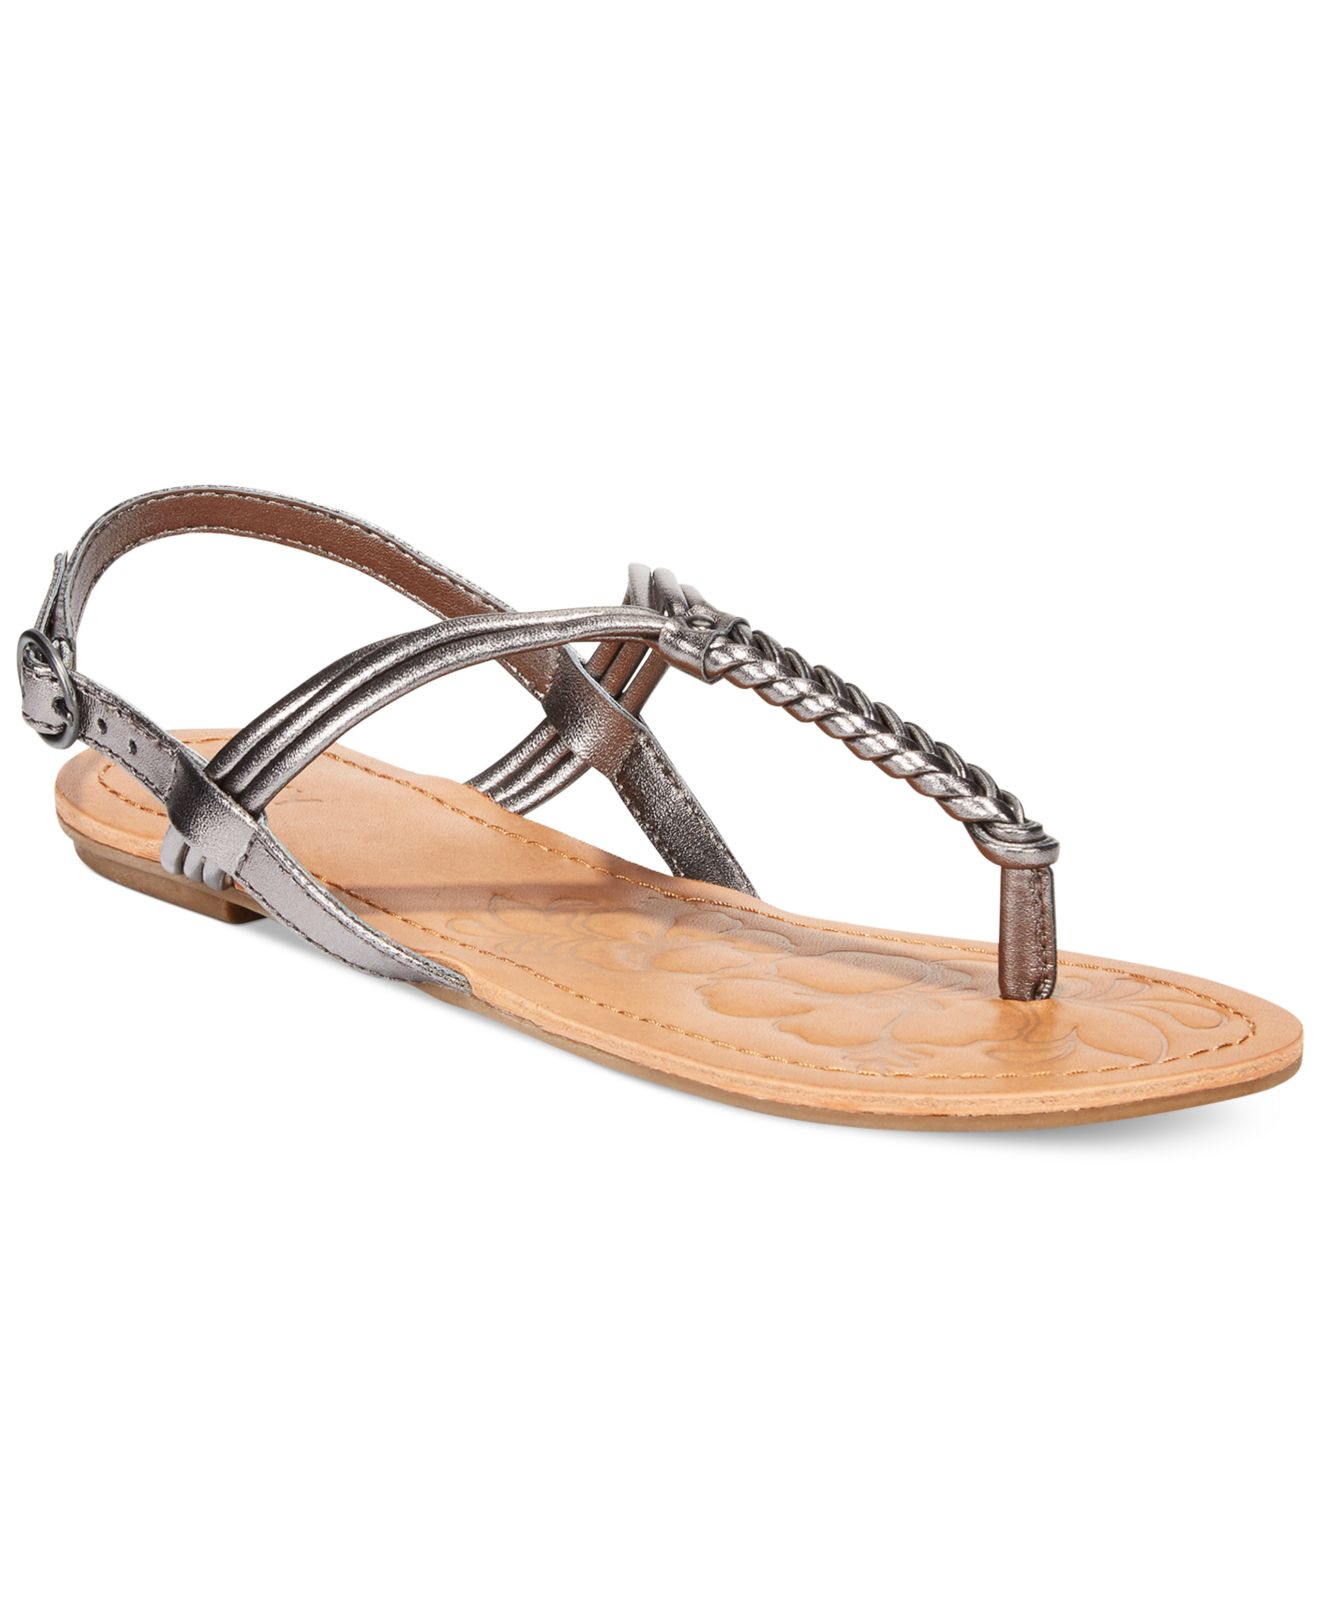 Lyst - Roxy Bhutan Braided Thong Sandals in Metallic